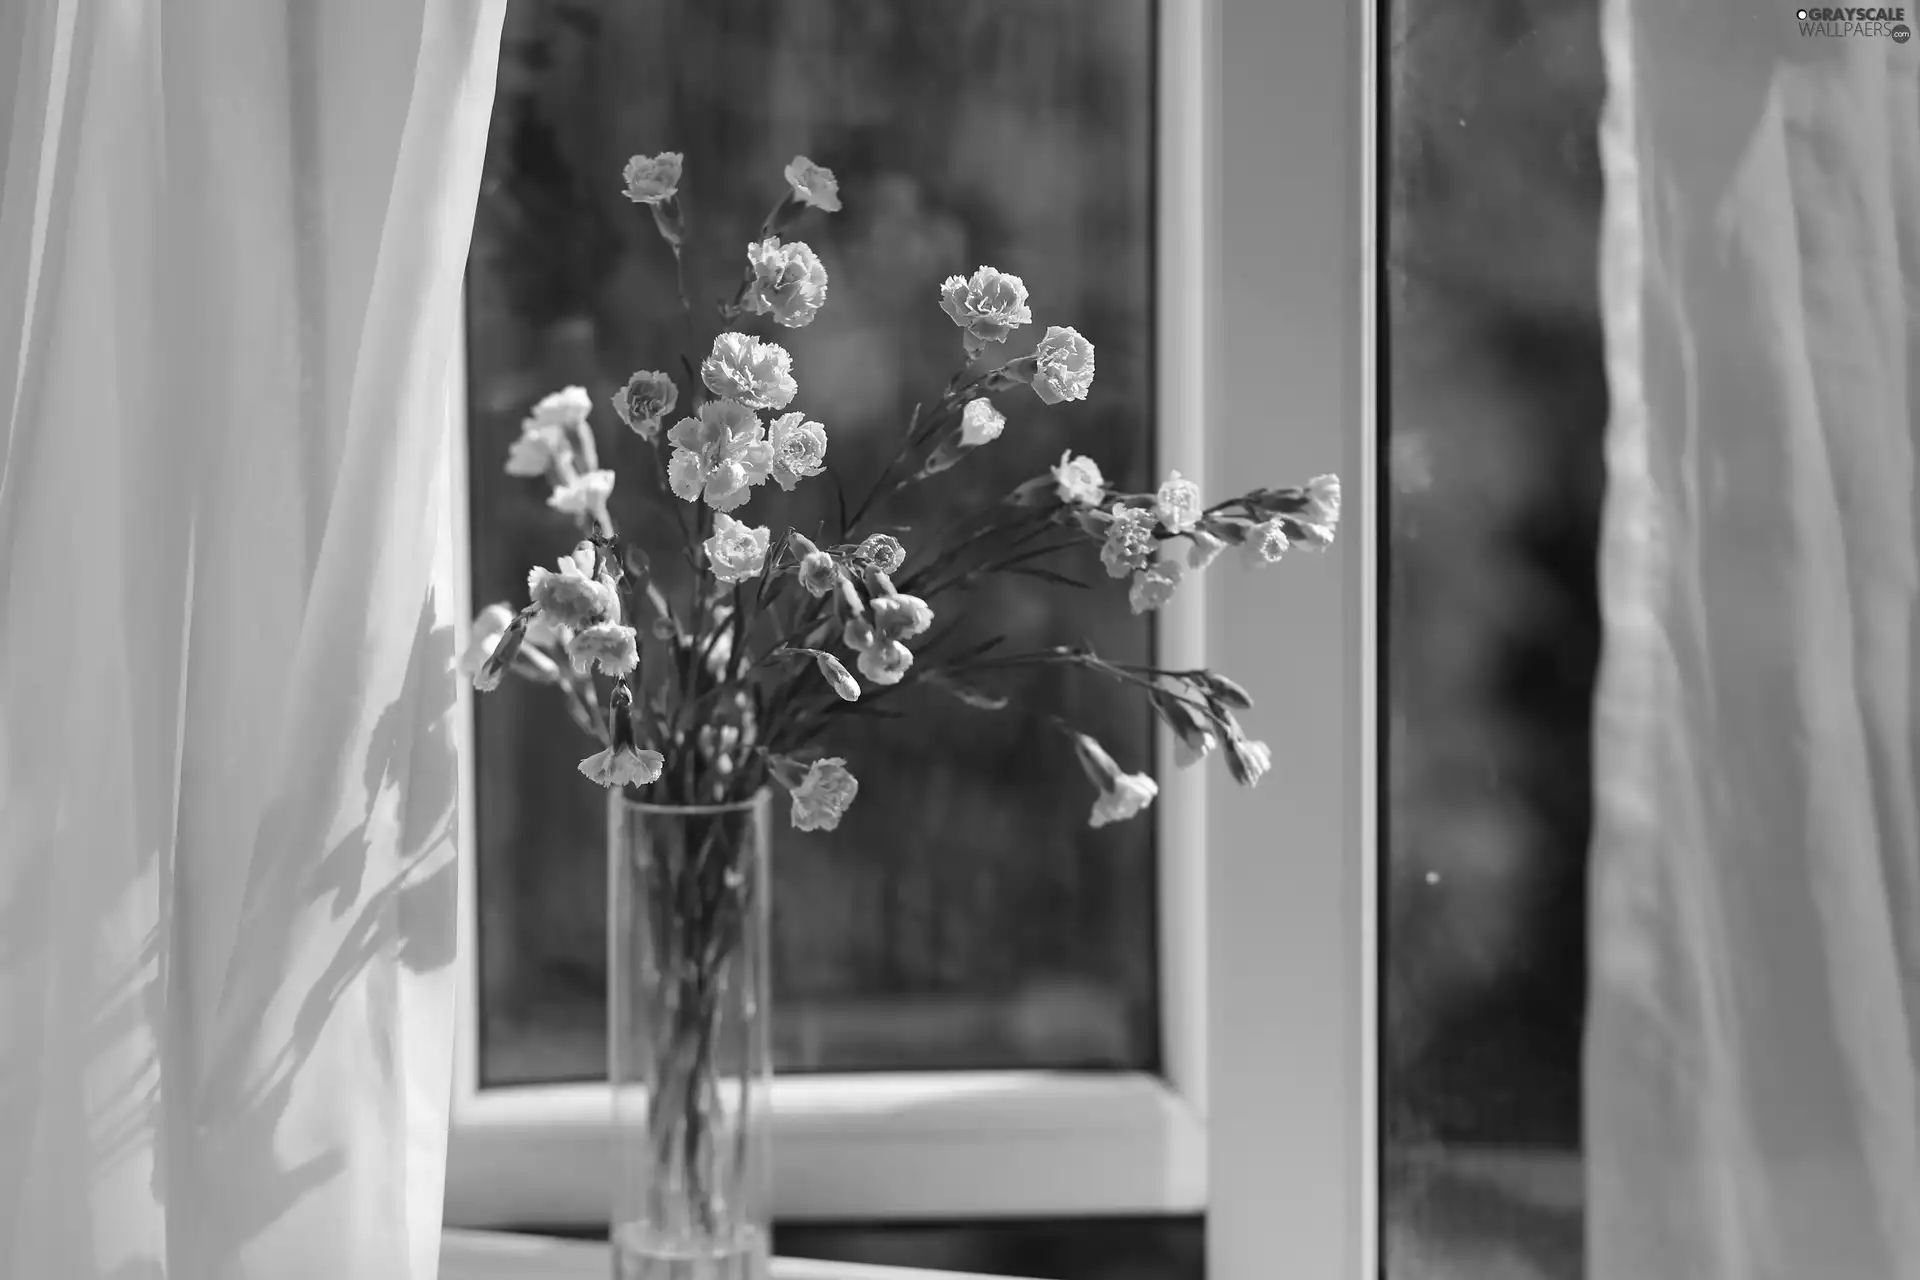 Flowers, Vase, Window, cloves